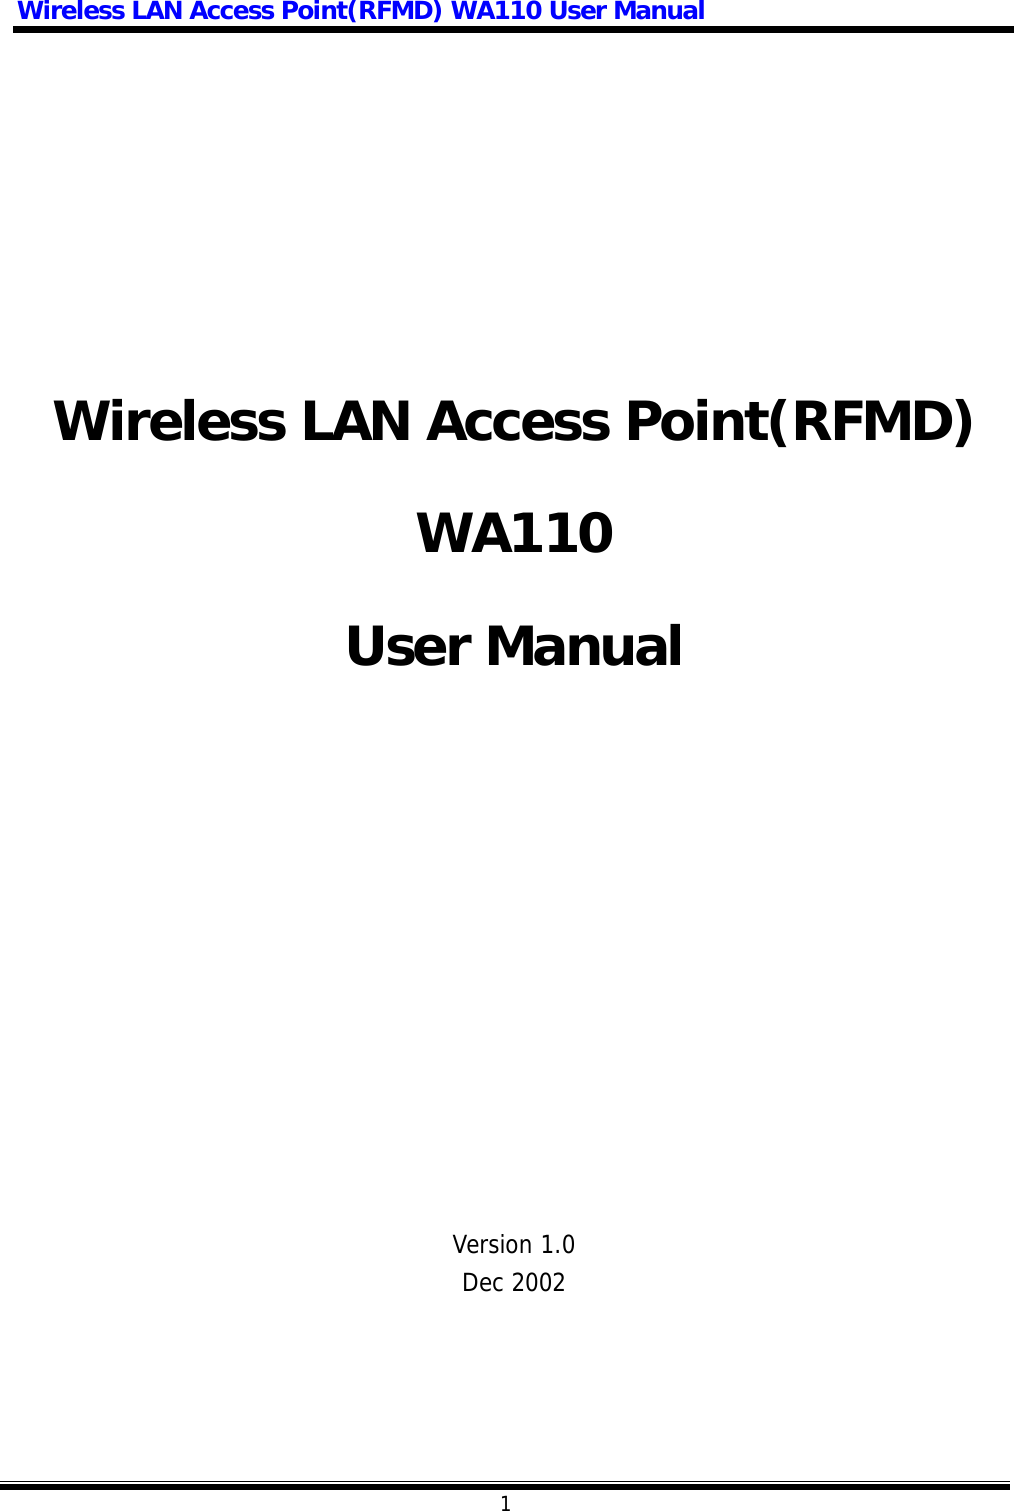 Wireless LAN Access Point(RFMD) WA110 User Manual  1          Wireless LAN Access Point(RFMD) WA110 User Manual               Version 1.0 Dec 2002 